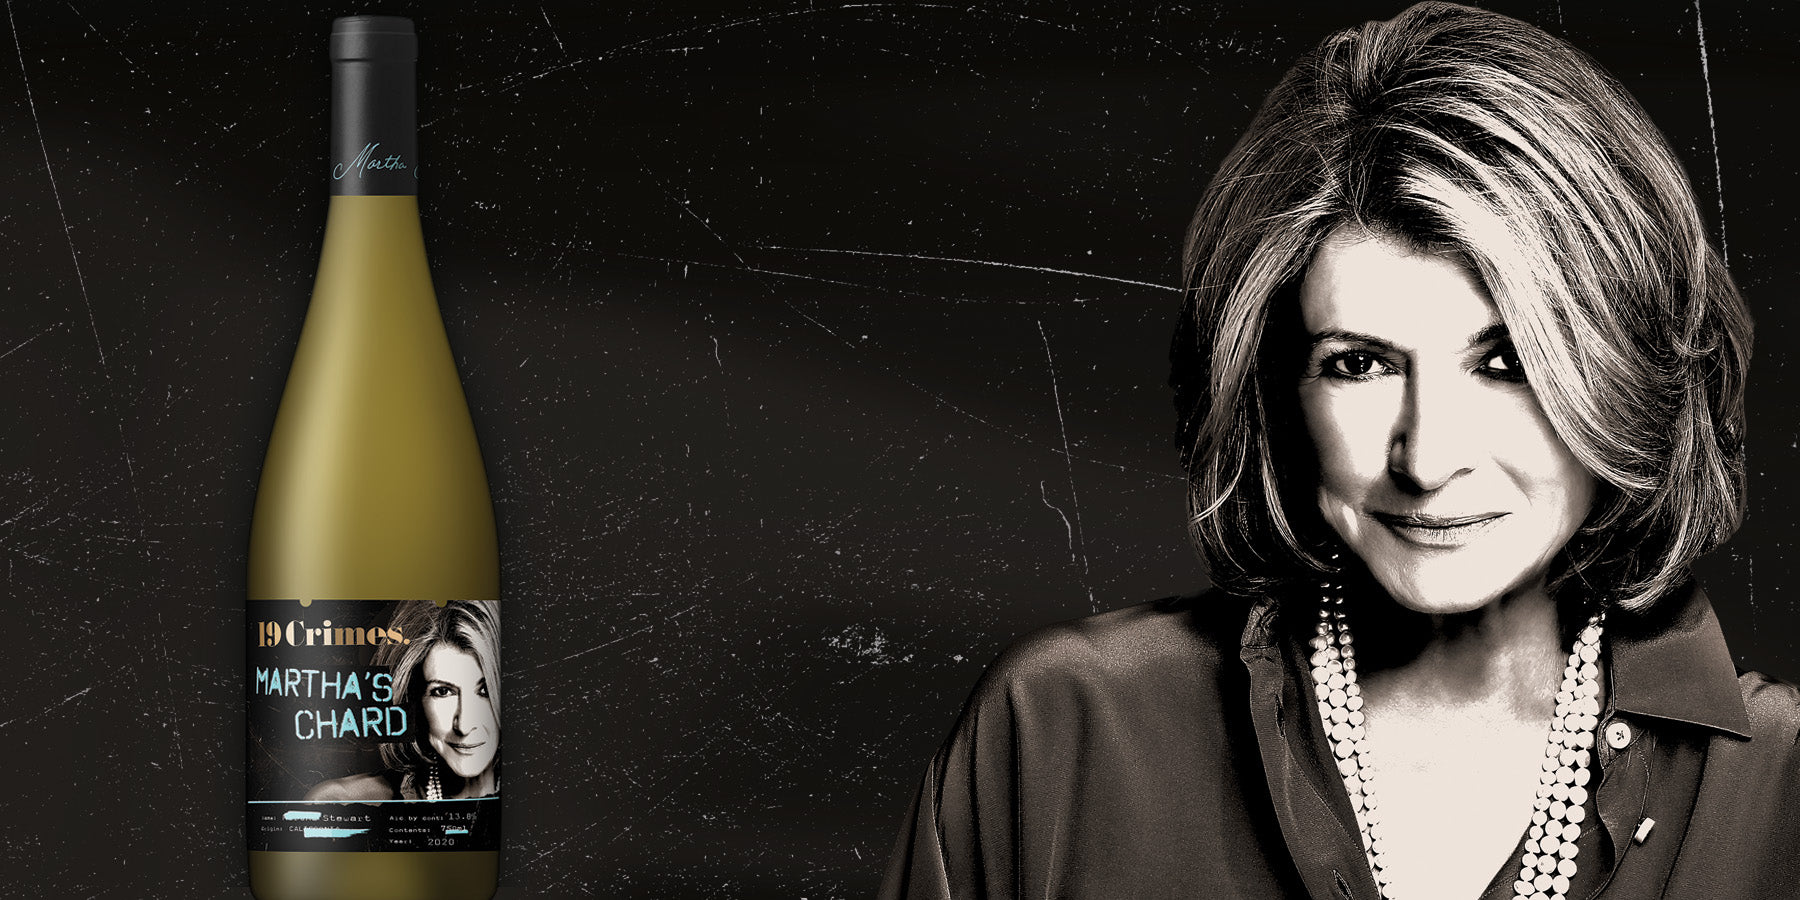 19 Crimes Martha Stewart Hard Chard Chardonnay